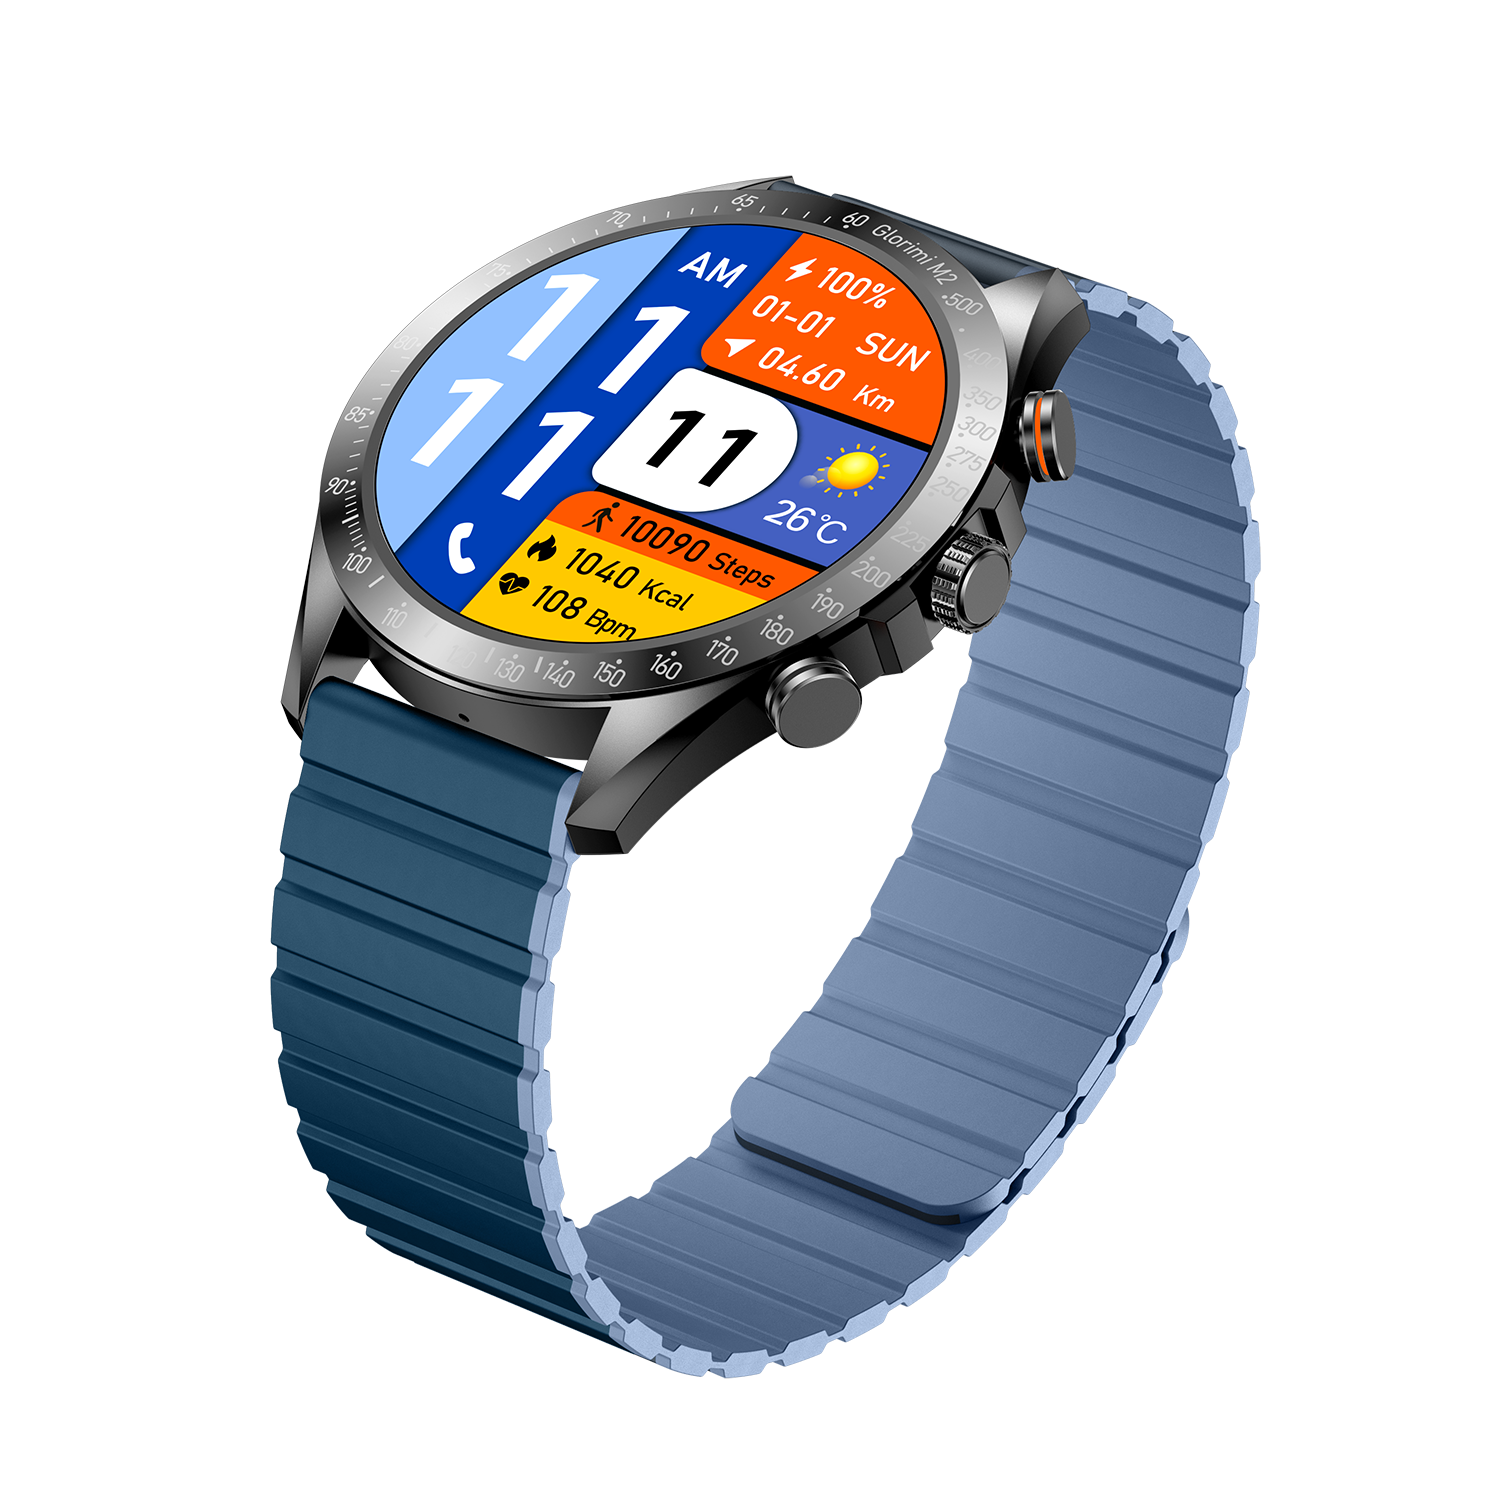 M2 Bluetooth Intelligence Health Smart Band Wrist Watch Monitor Smart  Bracelet: my99shop.com: Sports, Fitness & Outdoors